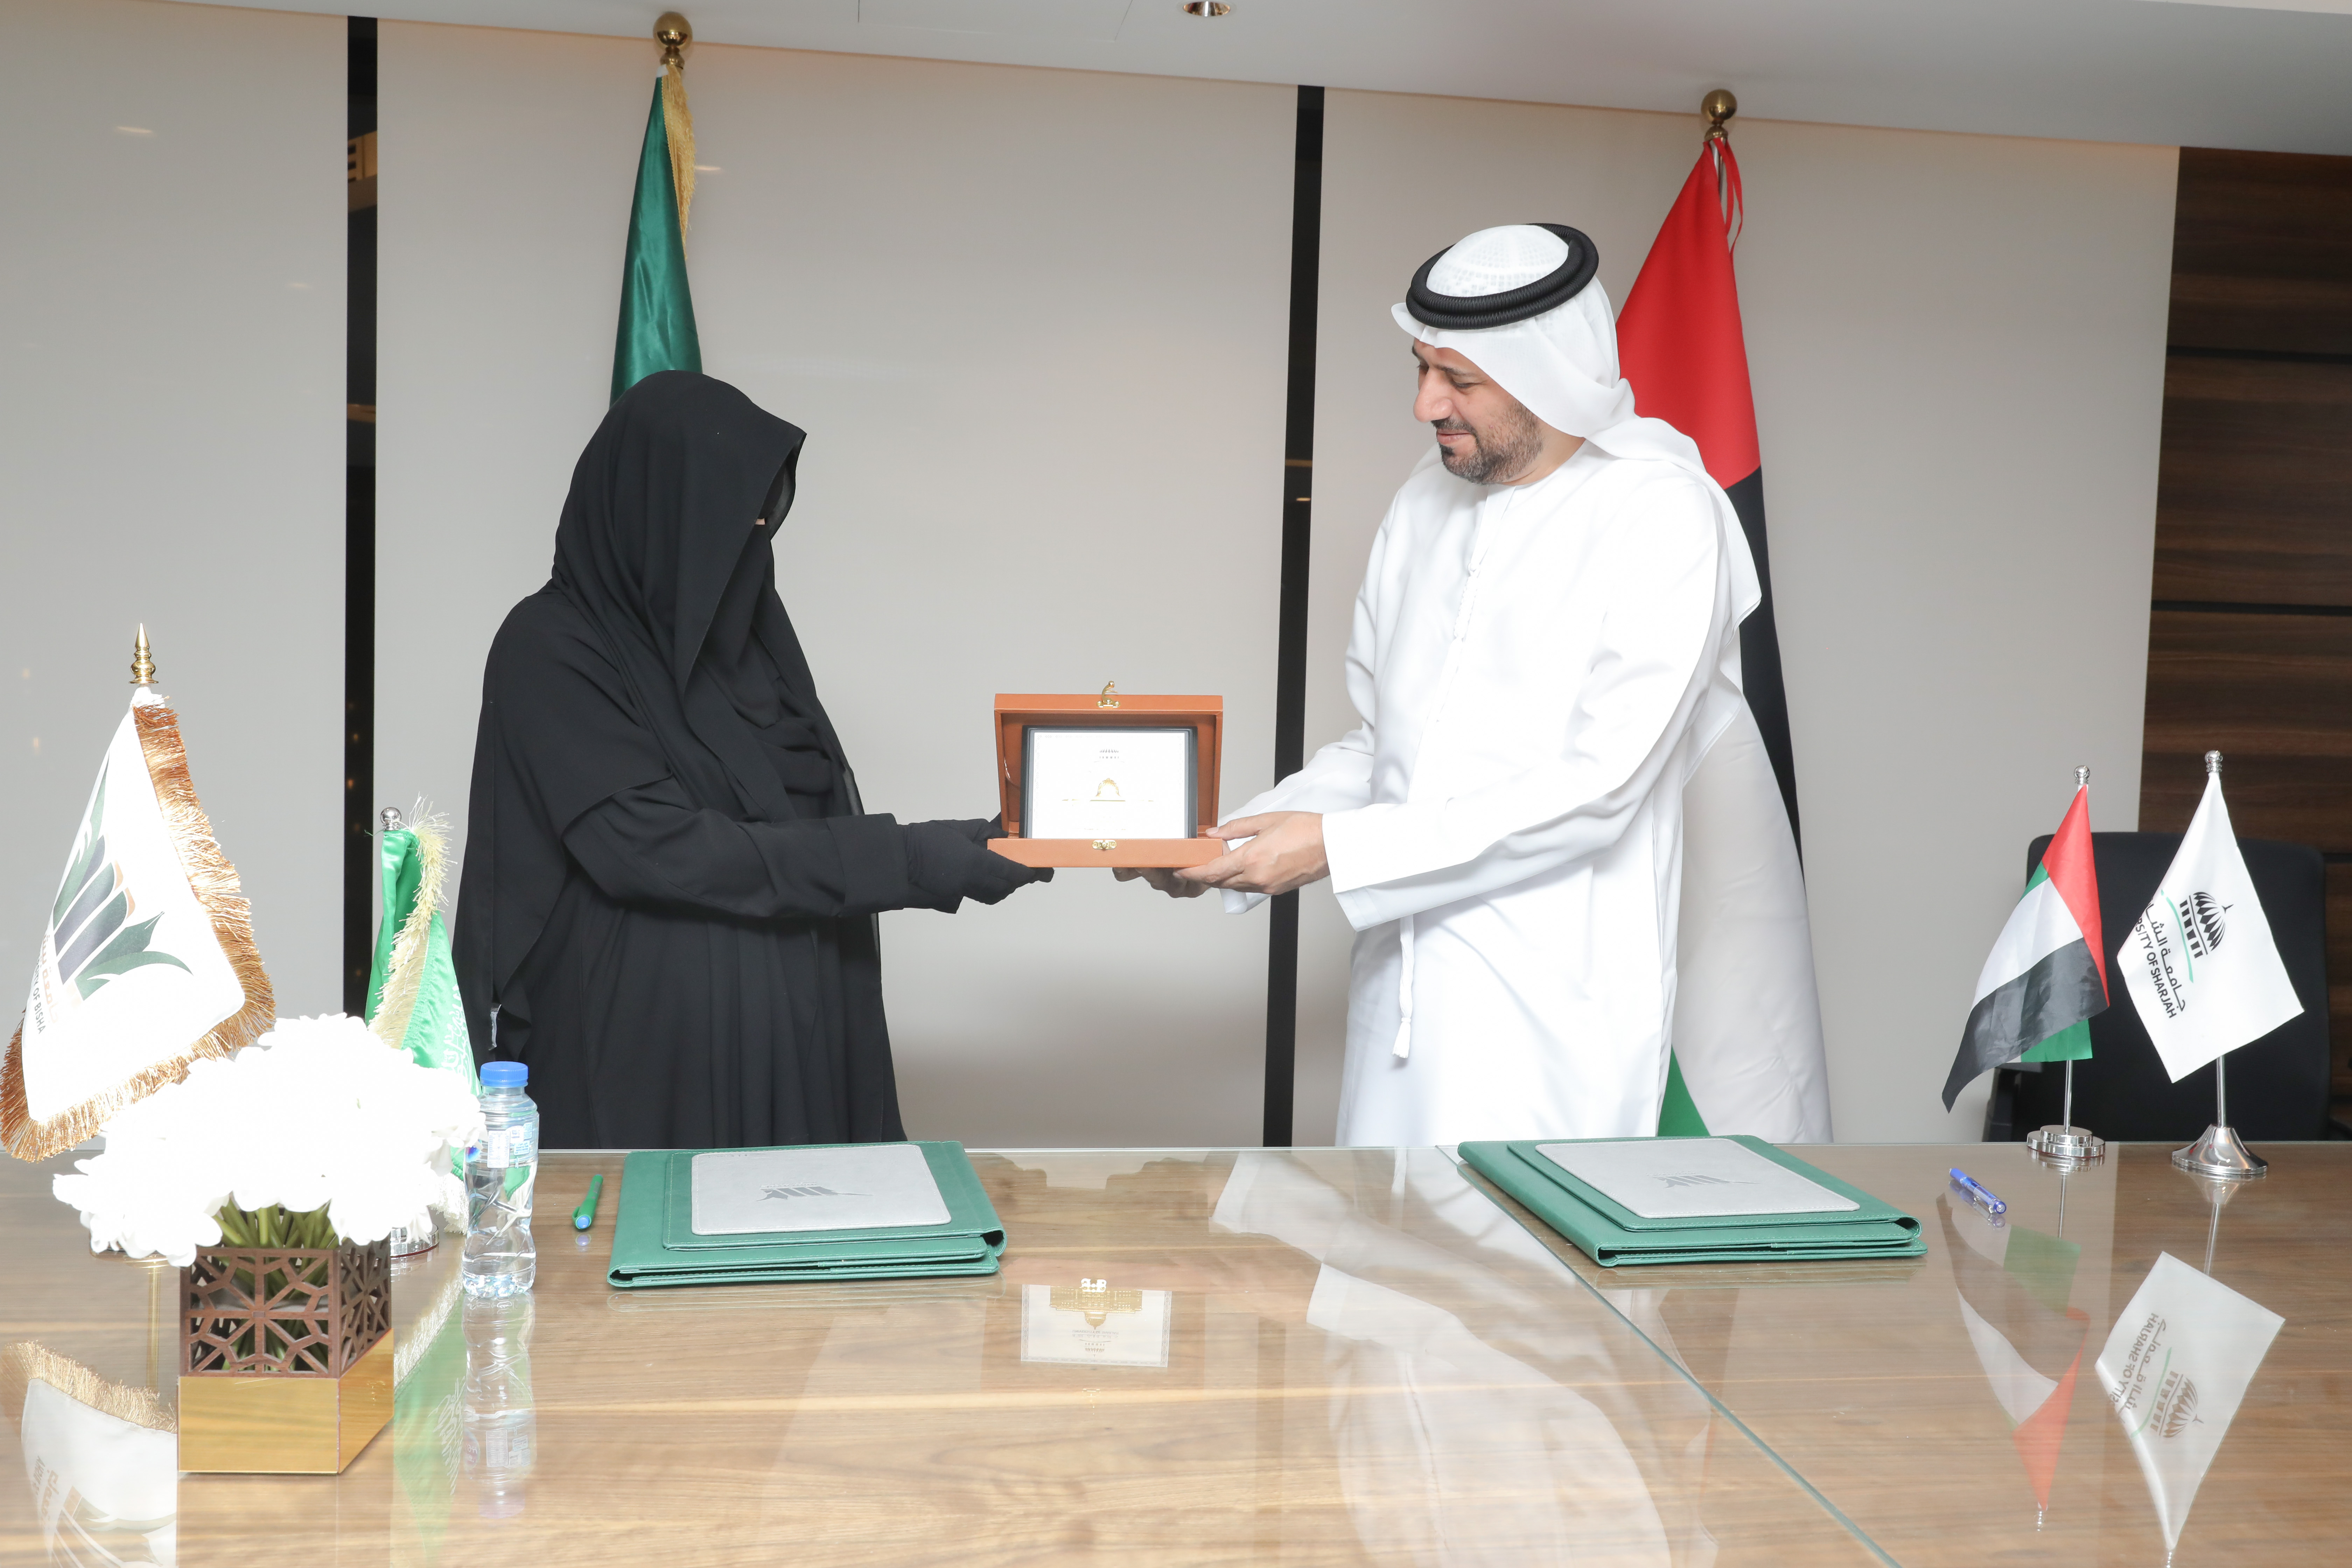 Signing a memorandum of understanding between the University of Bisha and the University of Sharjah